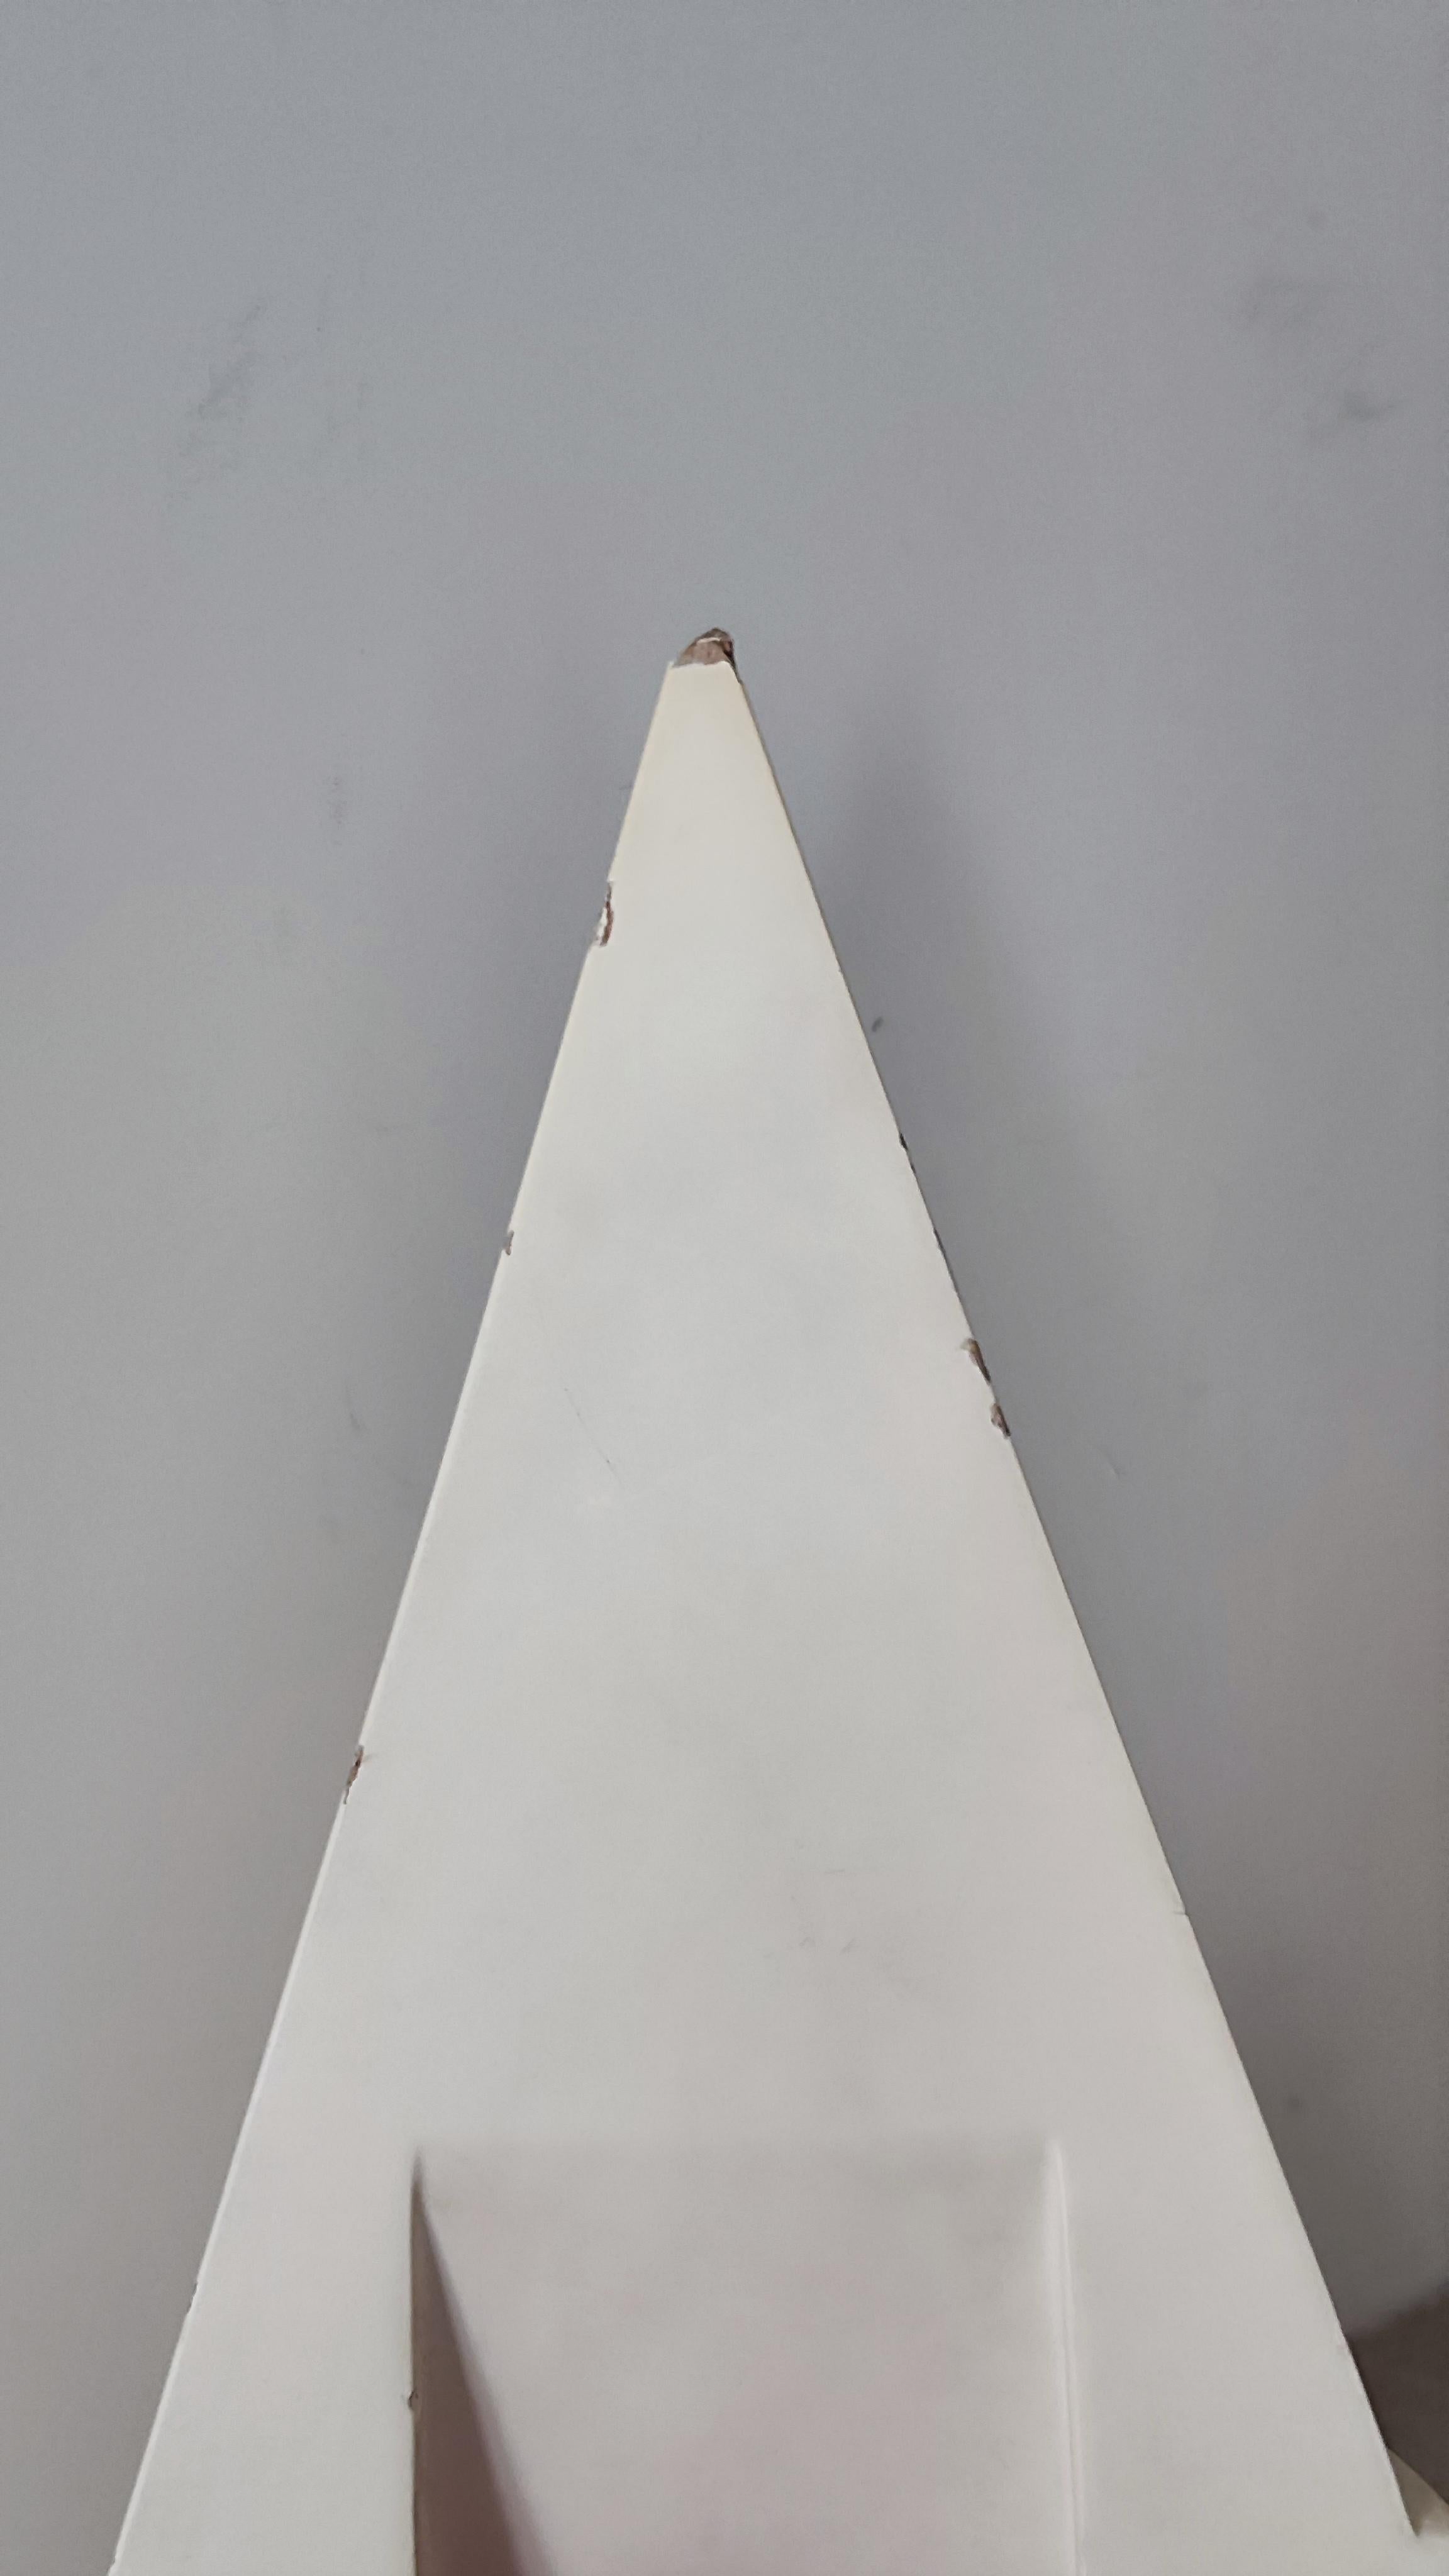 Abstrakte postmoderne polychrome Pyramidenskulptur Memphis 1980, Holz – signiert  im Angebot 10